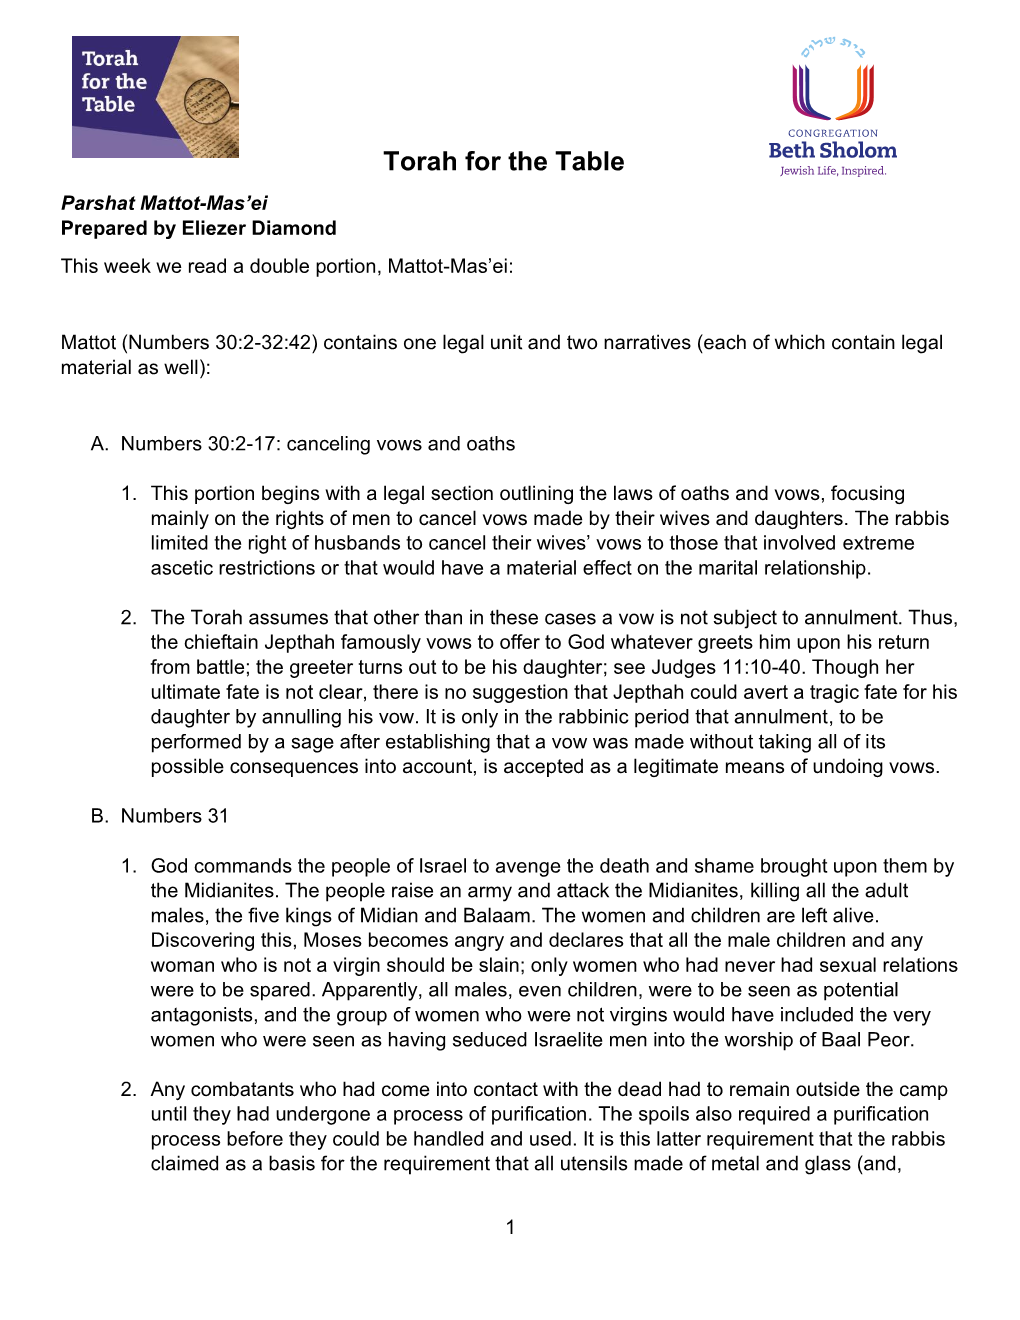 Torah for the Table Parshat Mattot-Mas’Ei Prepared by Eliezer Diamond This Week We Read a Double Portion, Mattot-Mas’Ei